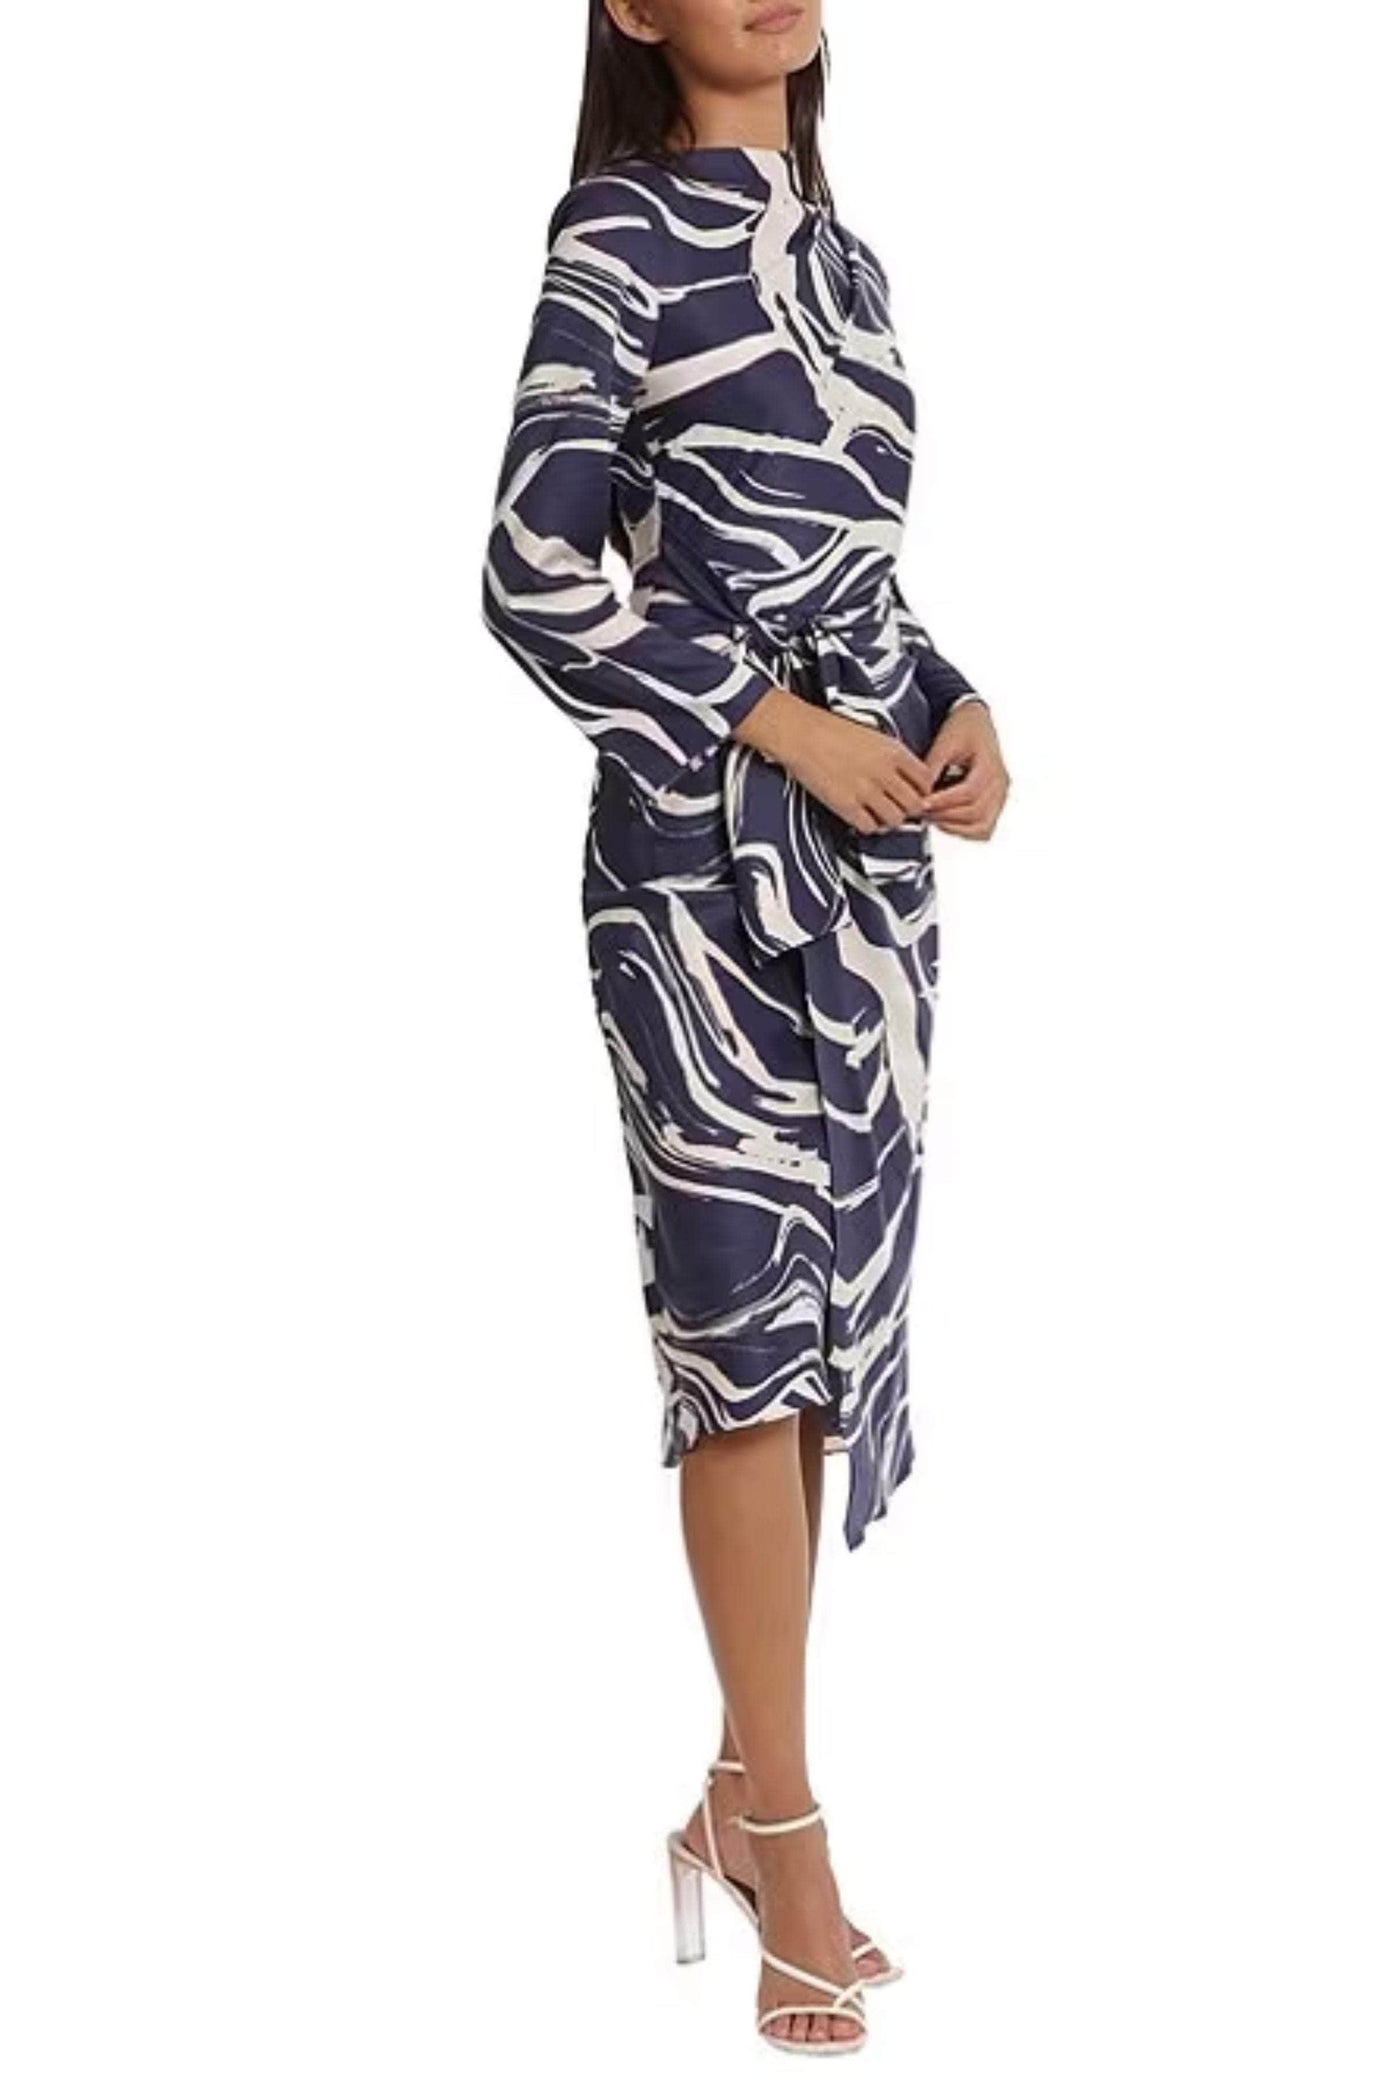 Donna Morgan D8441M - Tie Waist Marble Print Dress Special Occasion Dresses